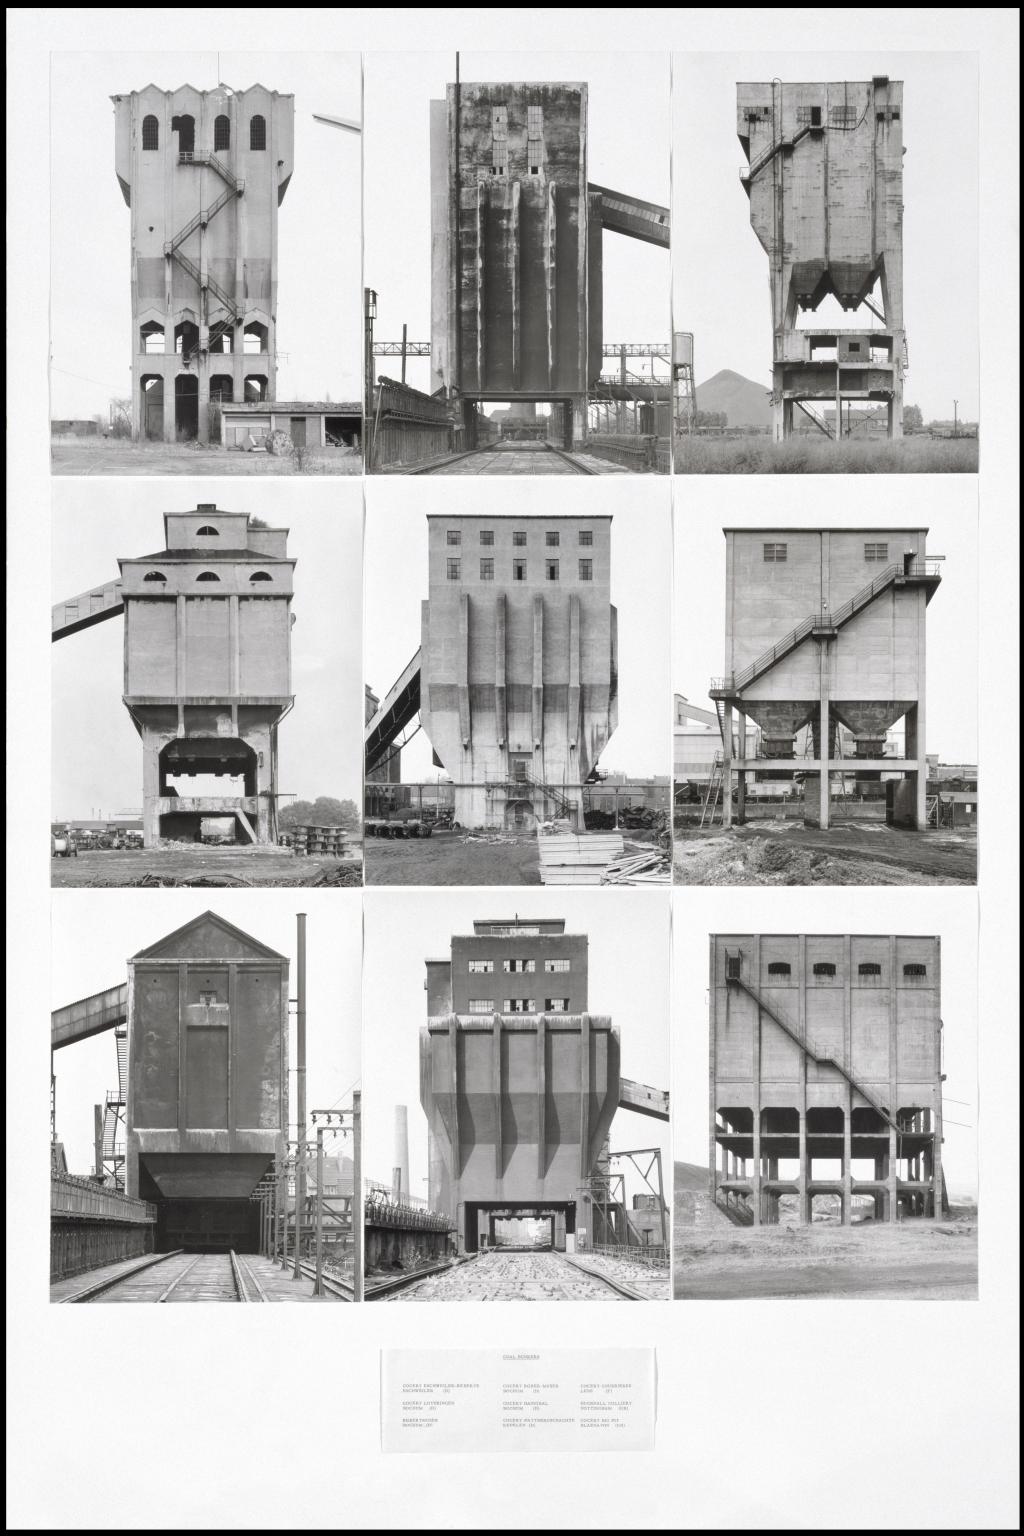 Coal Bunkers 1974 by Bernd Becher and Hilla Becher 1931-2007, 1934-2015